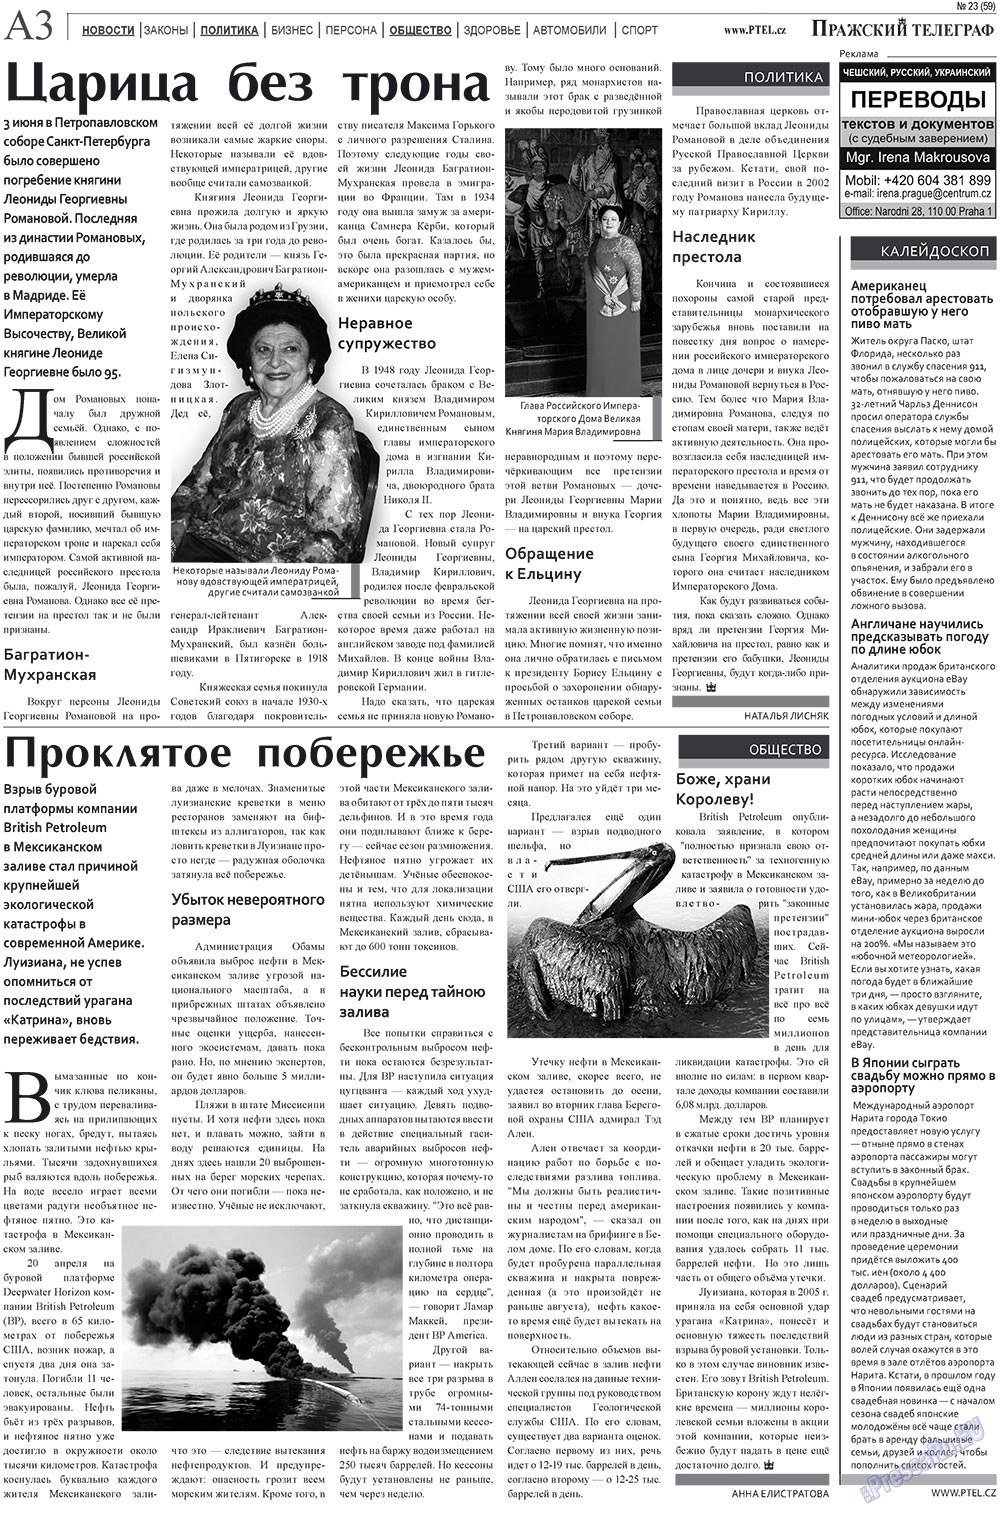 Пражский телеграф, газета. 2010 №23 стр.3